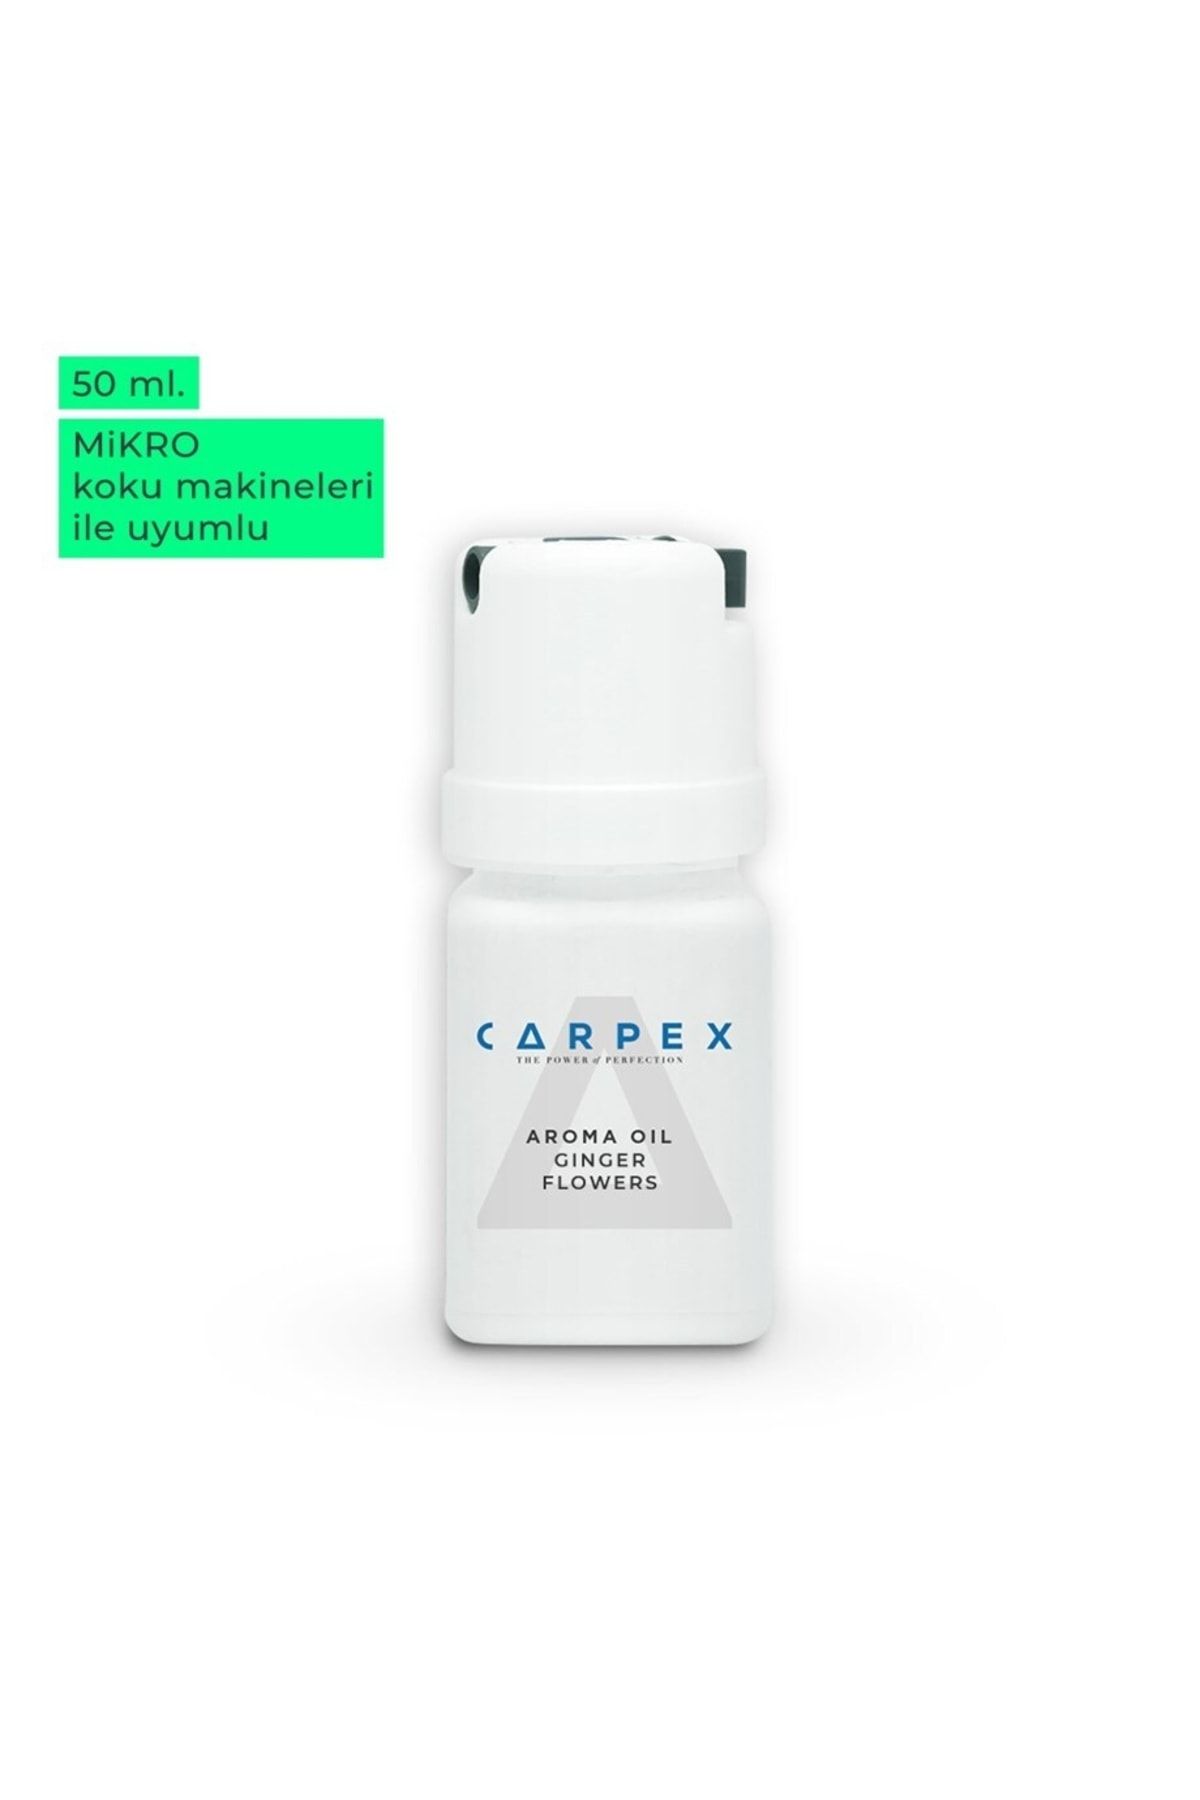 Carpex Ginger Flowers - Micro Koku Kartuşu 50 ml